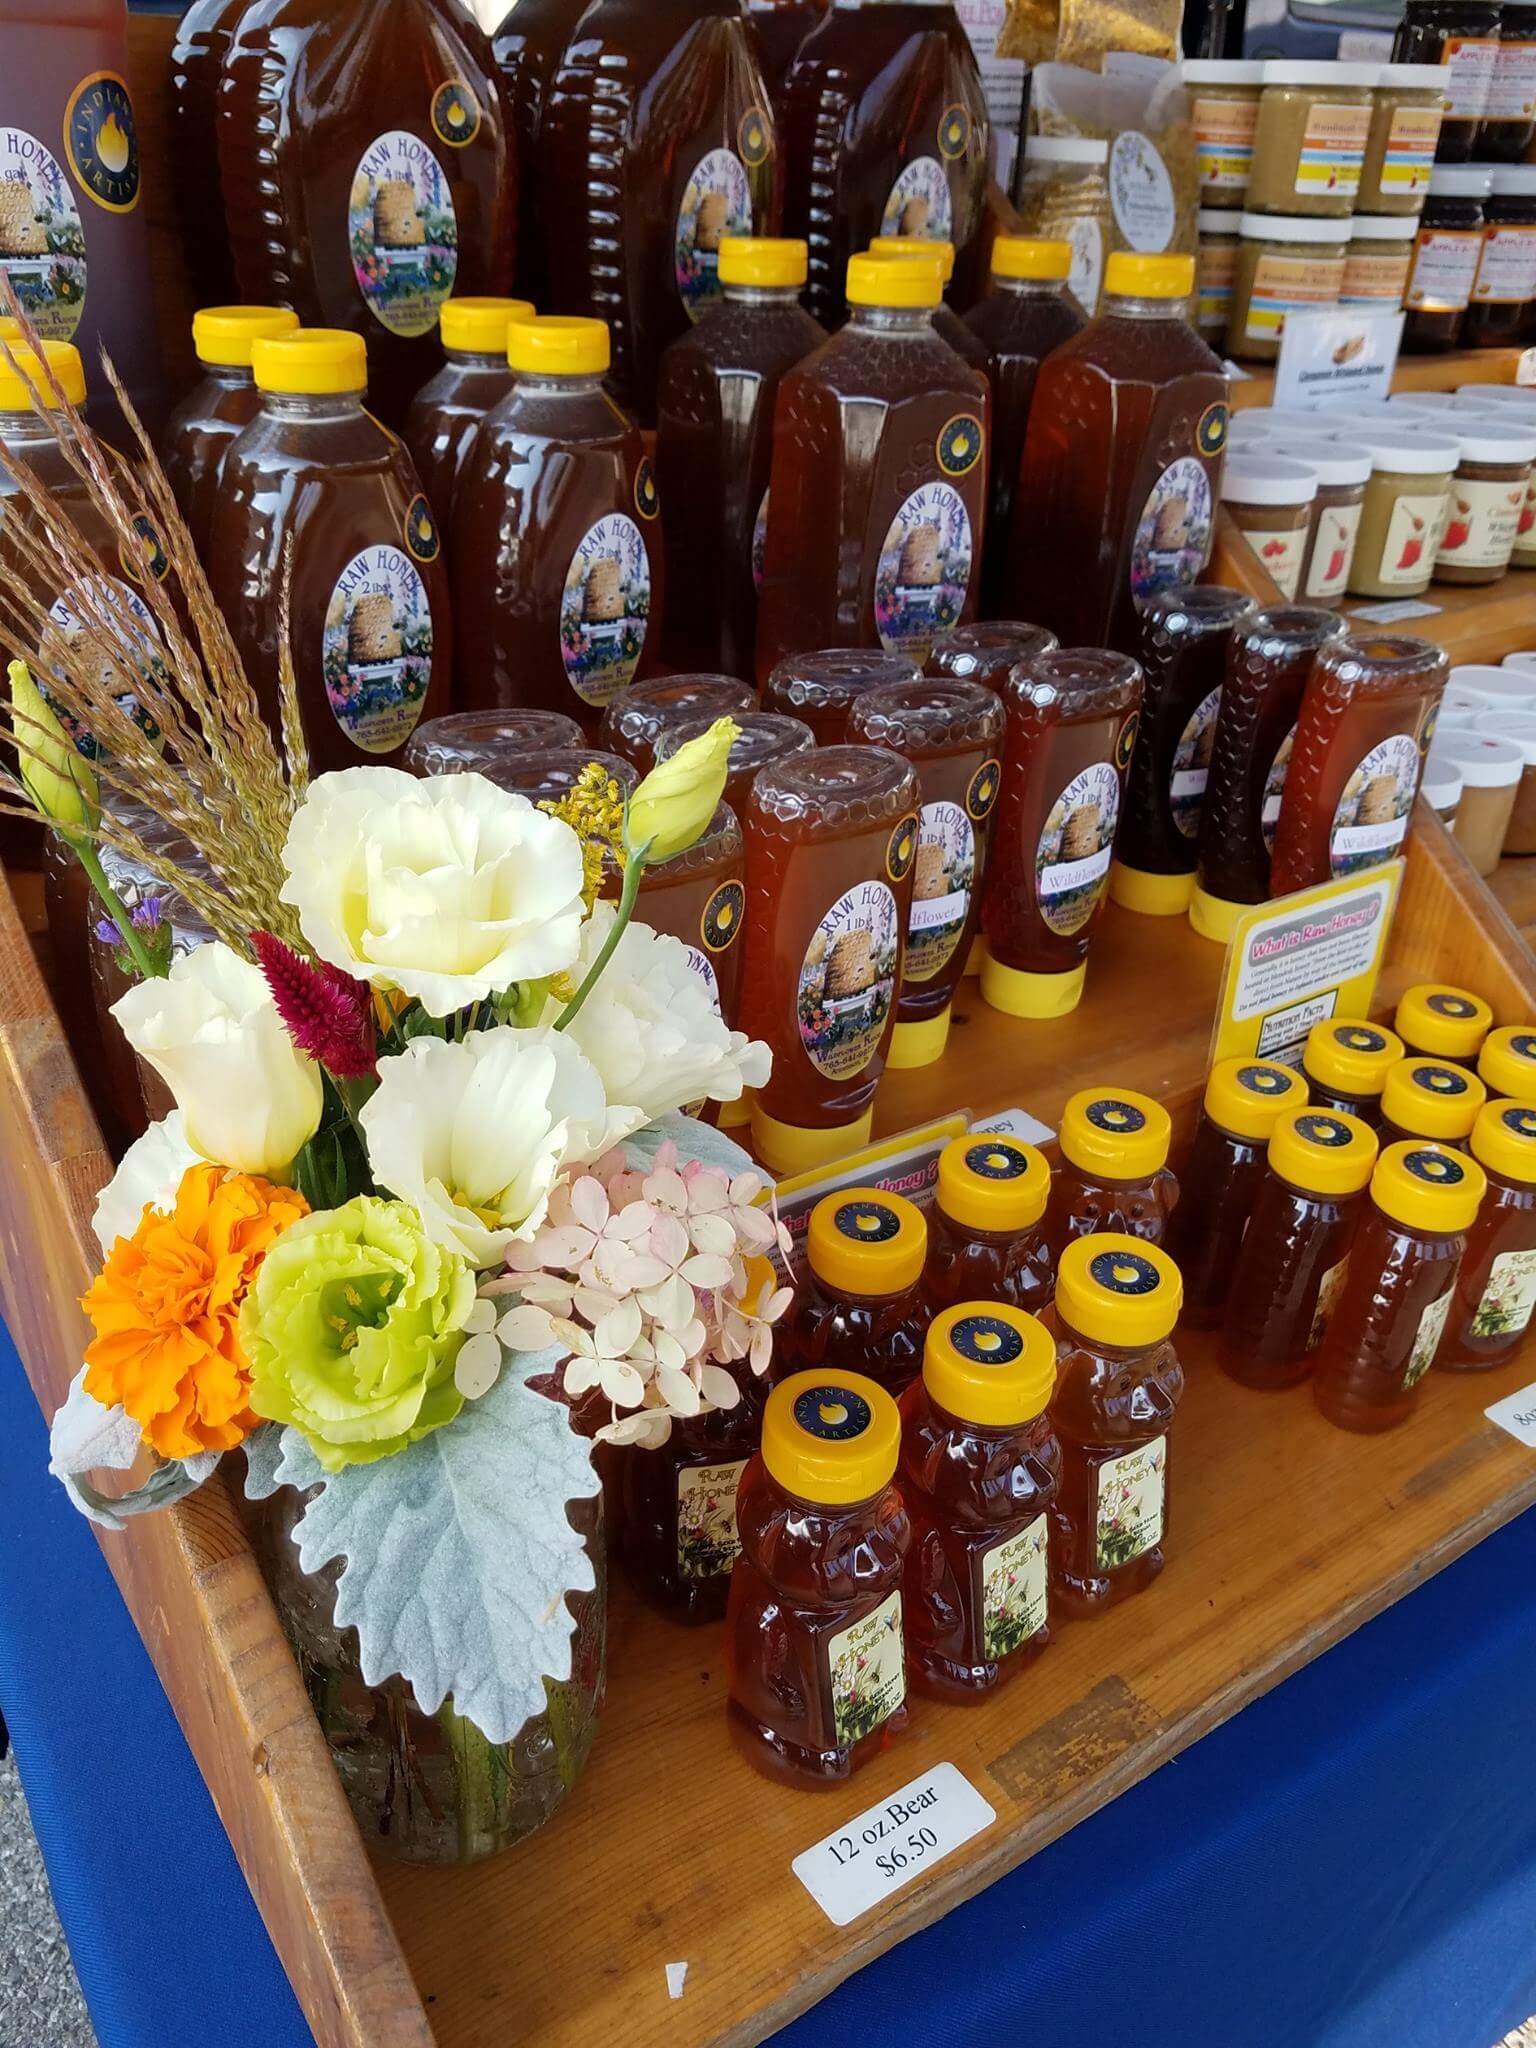 Wildflower Ridge Honey in Anderson